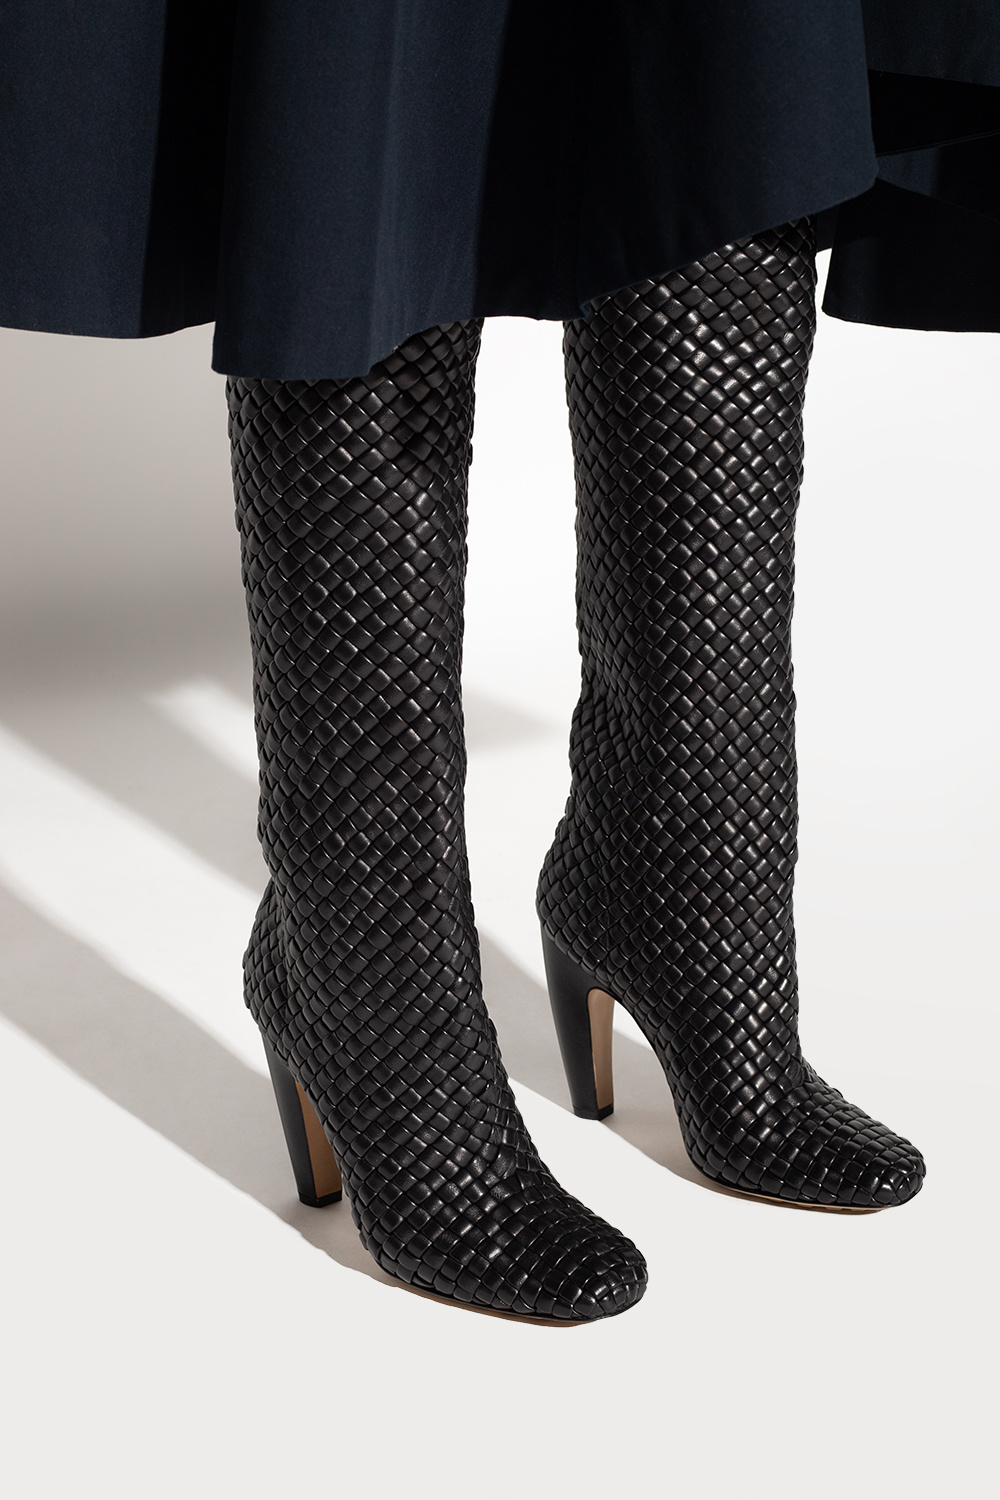 Bottega Veneta ‘Canalazzo’ heeled boots